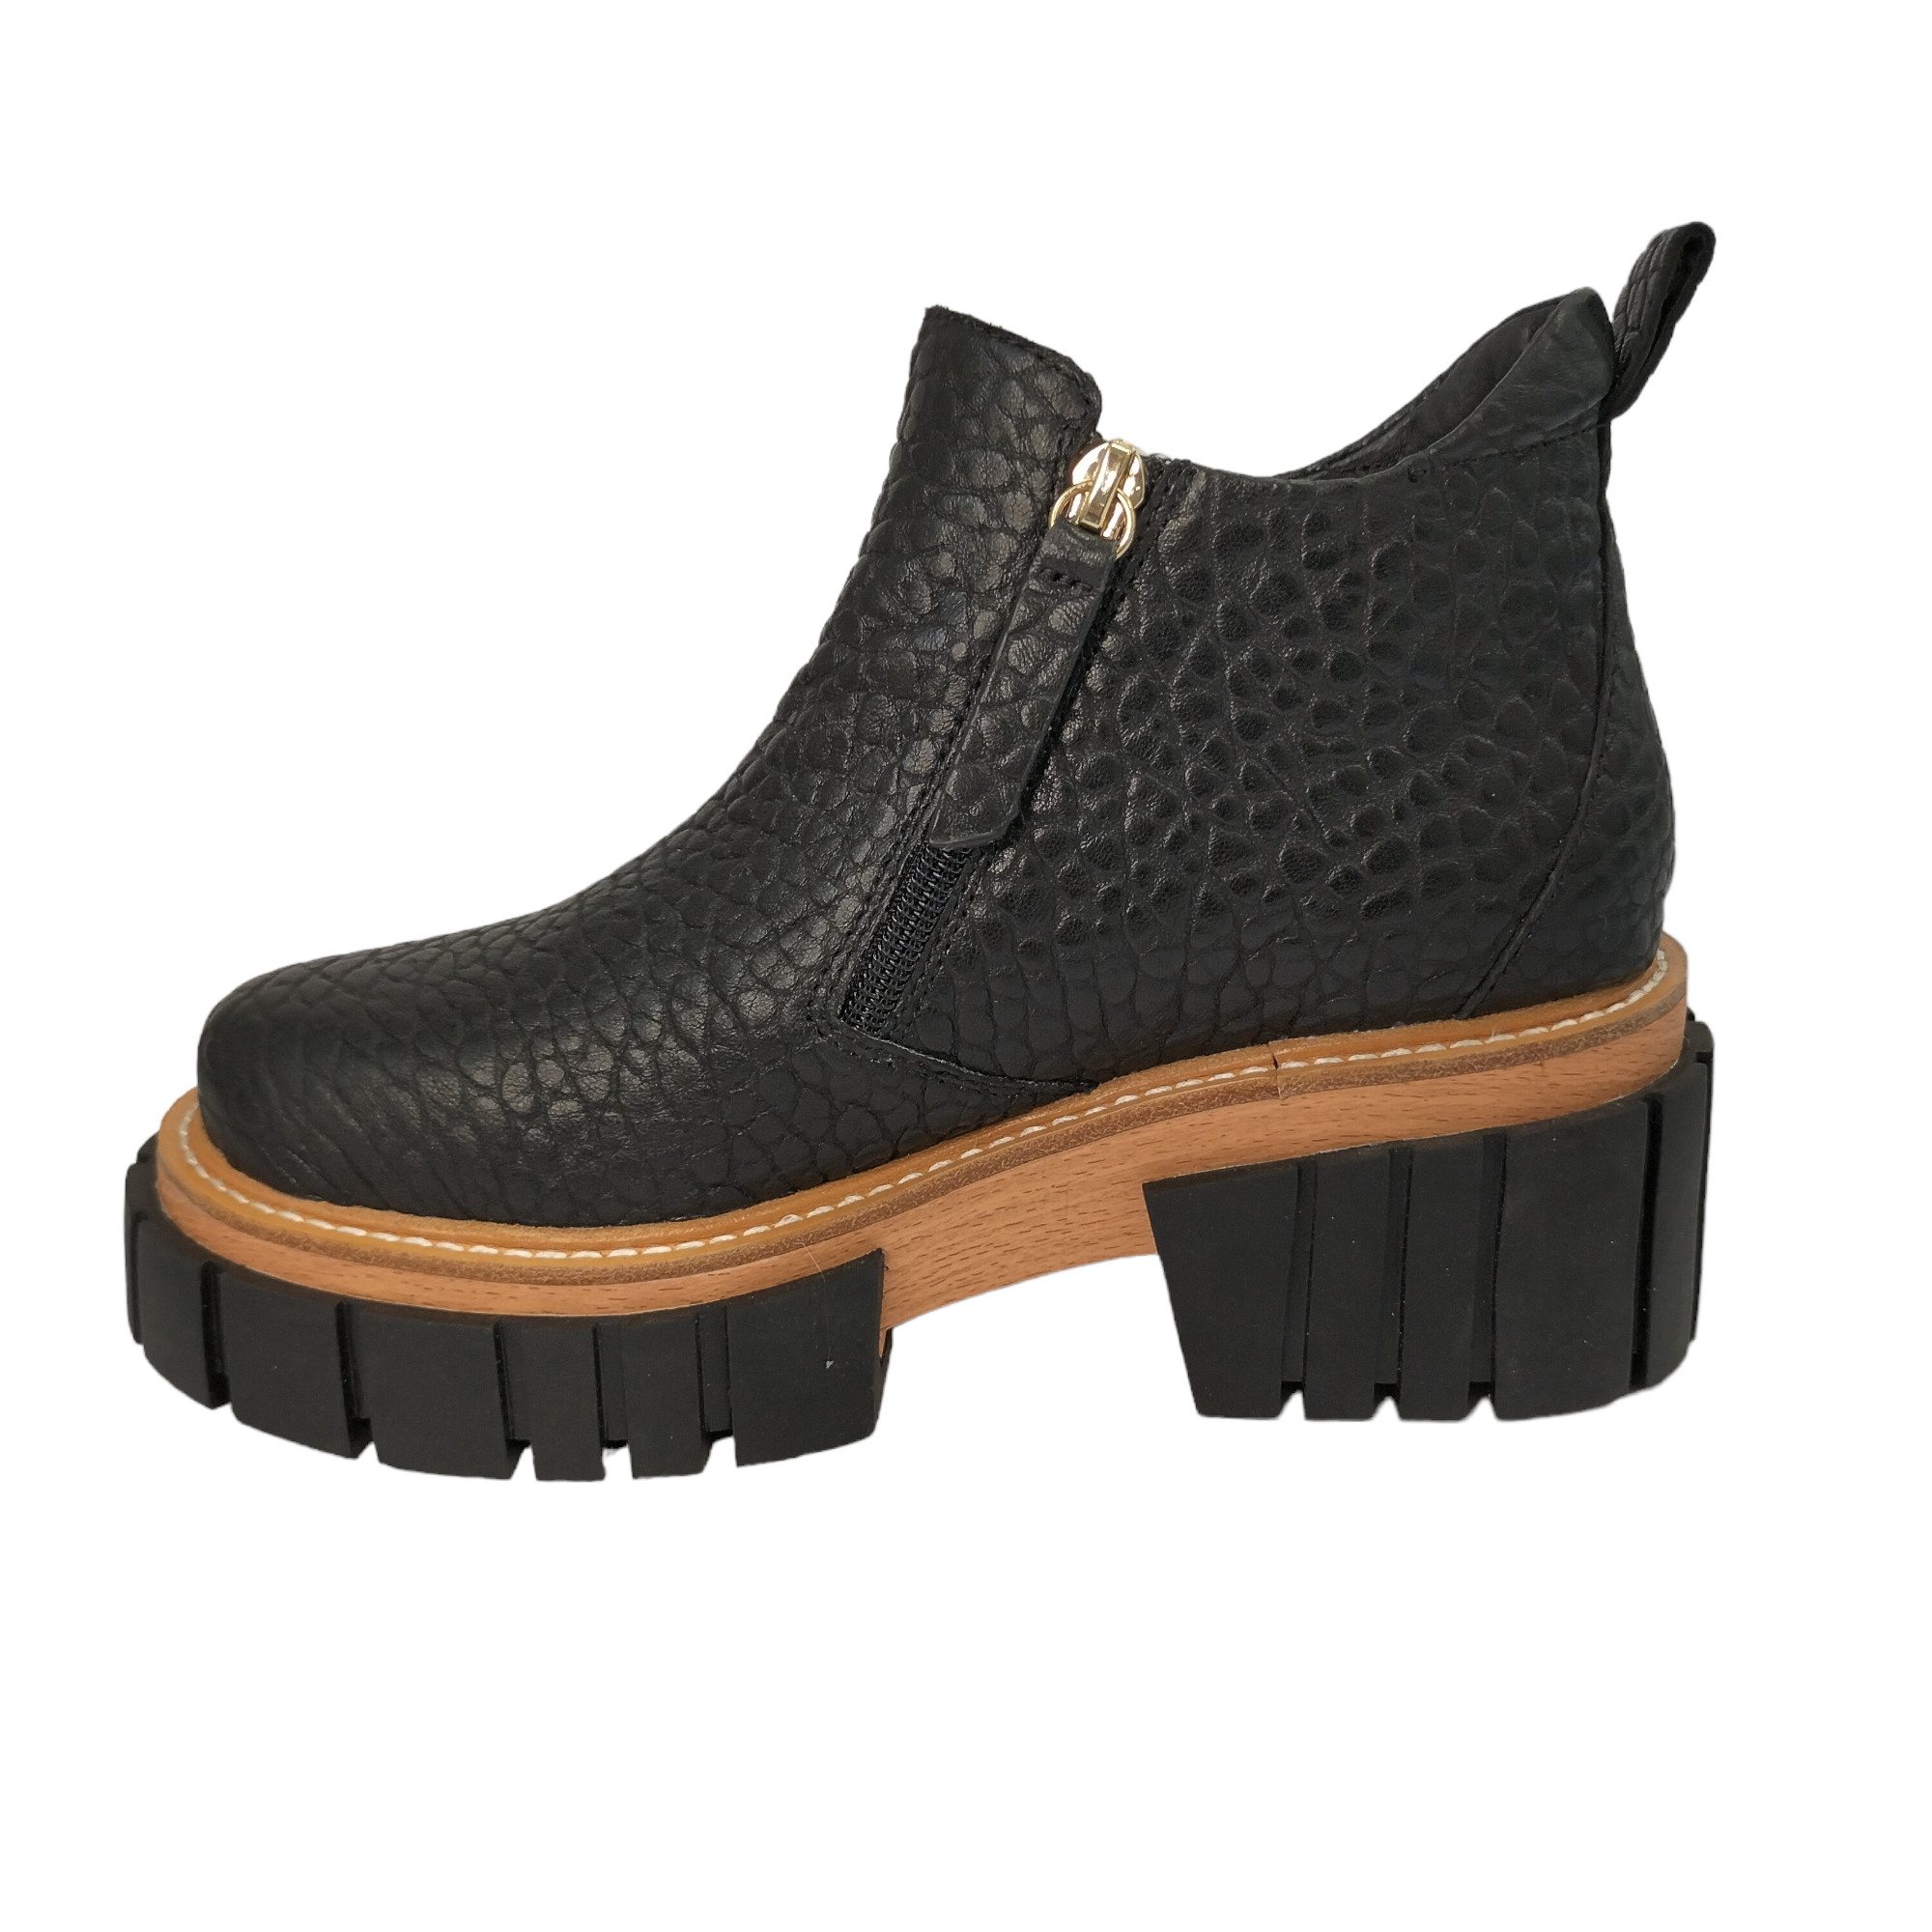 Blake - shoe&amp;me - Tamara - Boot - Boots, Wedges, Winter, Womens